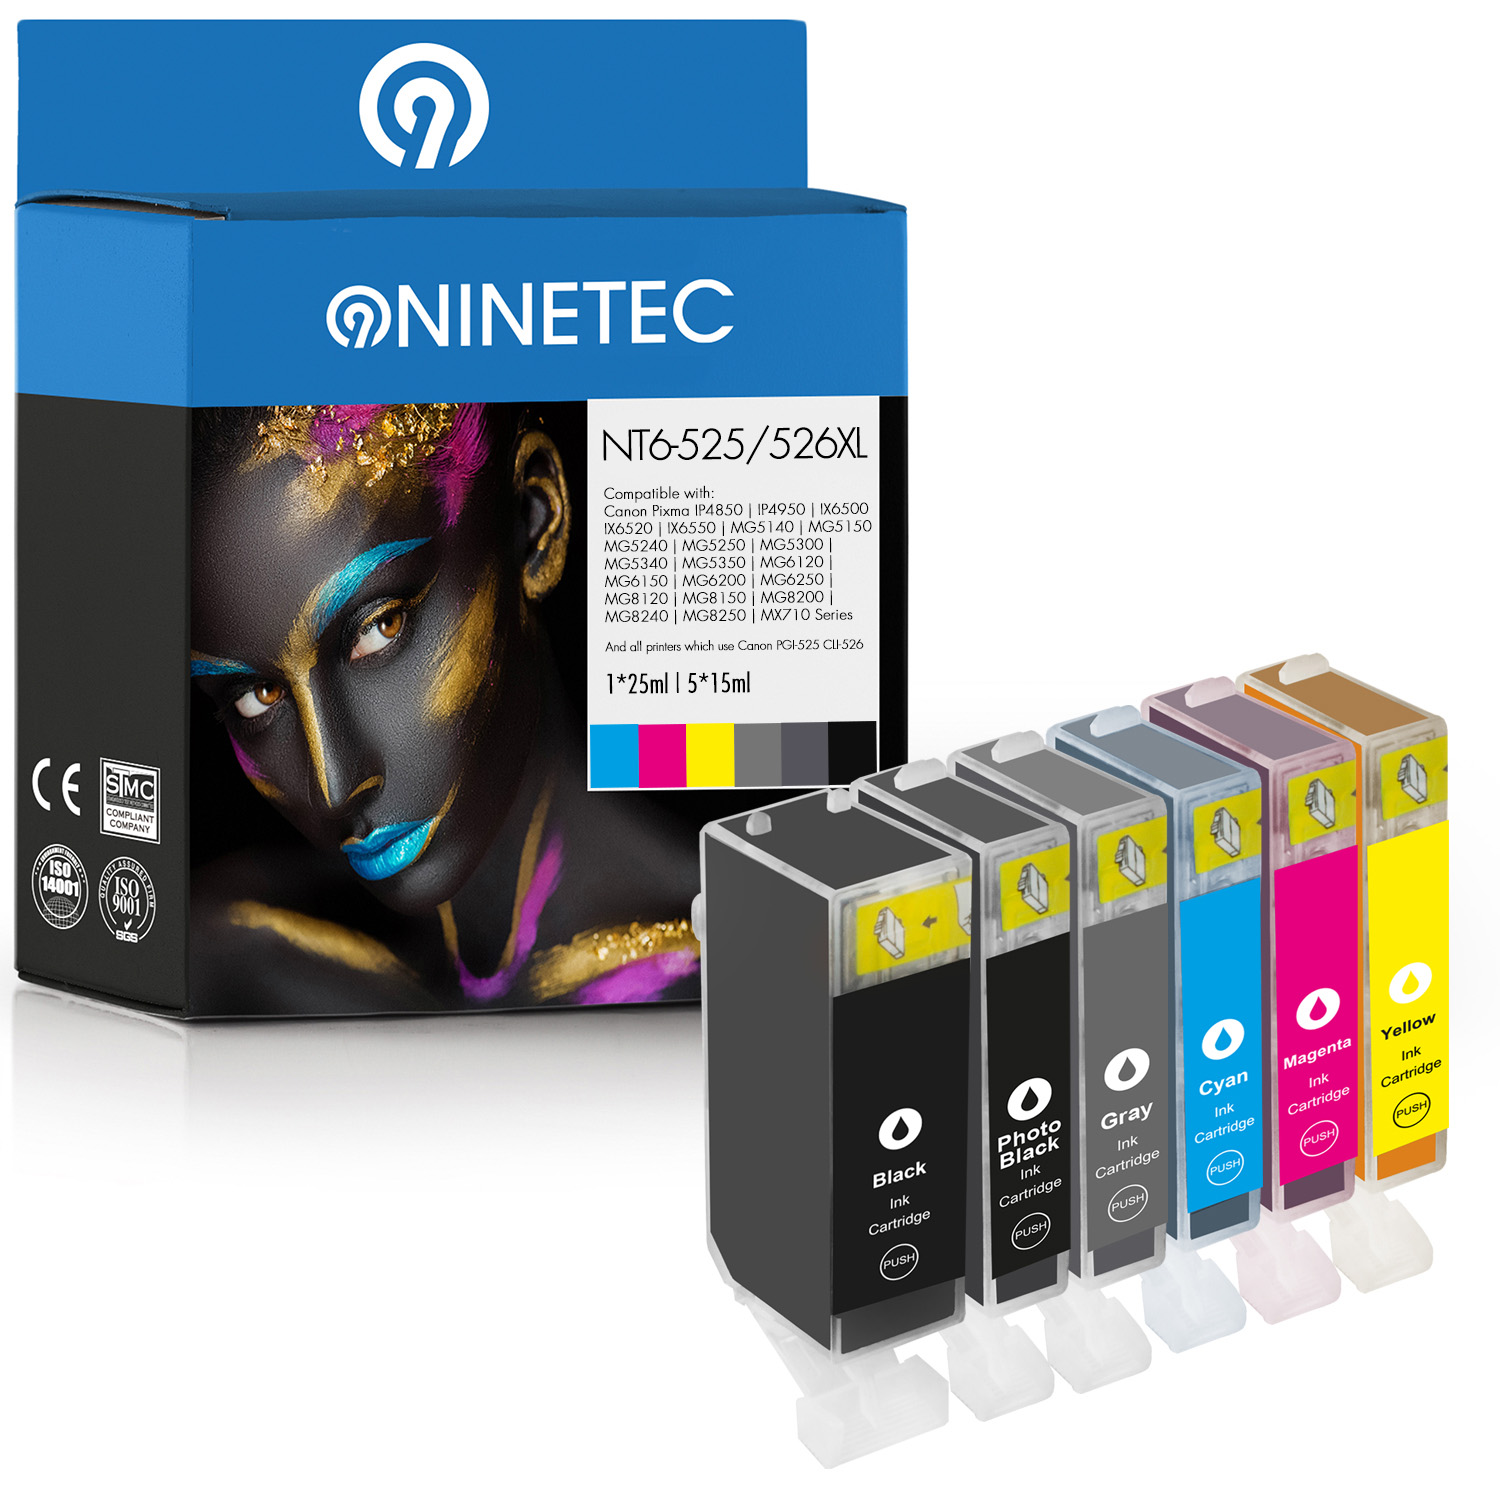 NINETEC 6er Set ersetzt Canon 017) Tintenpatronen (4540 PGI-525 magenta, B cyan, black, yellow, photoblack, CLI-526 grey